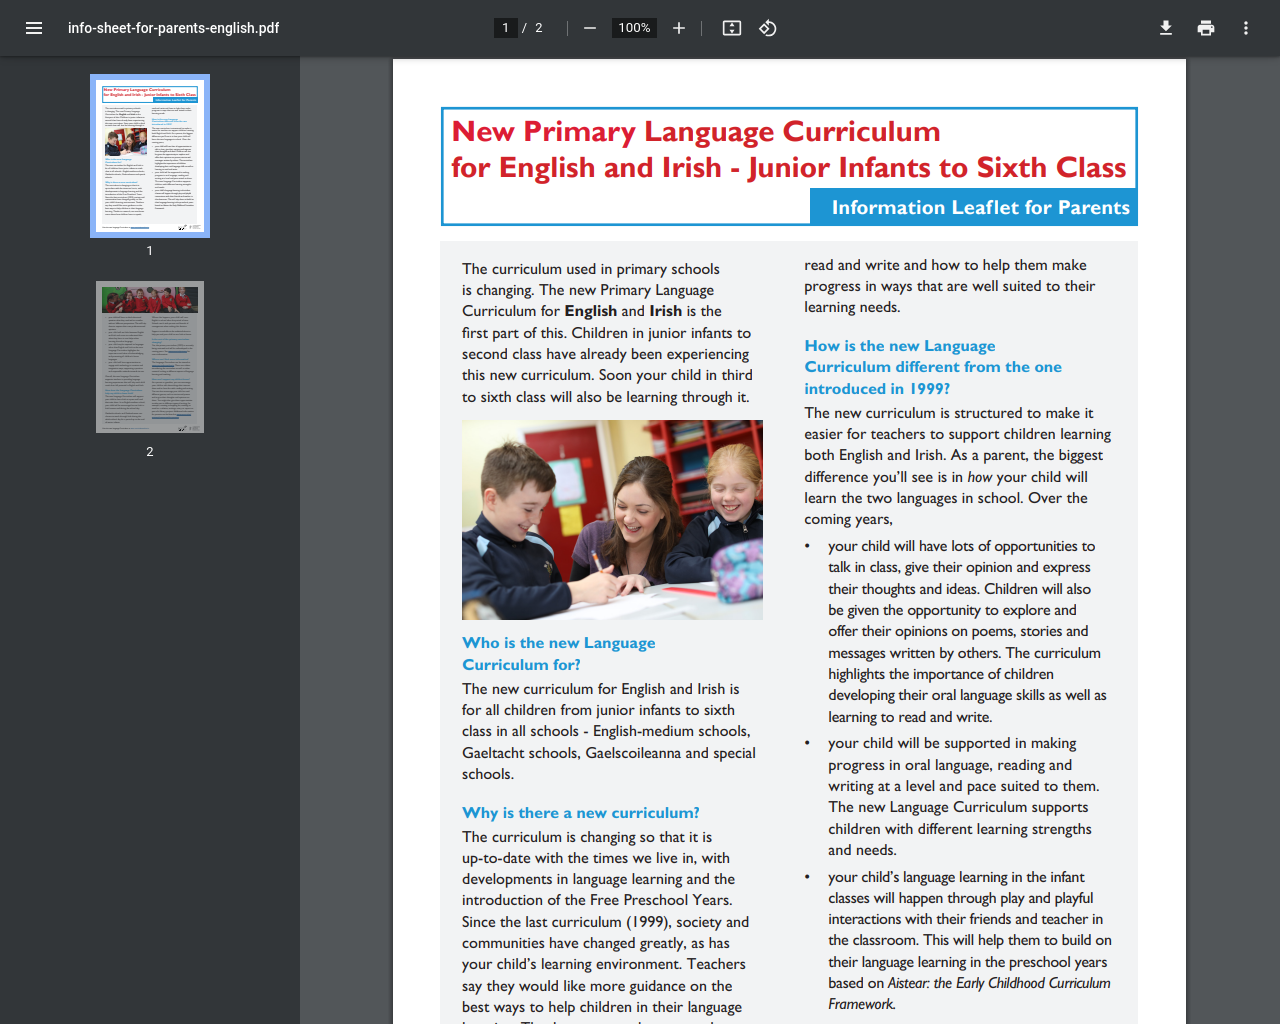 New Primary Language Curriculum for English and Irish